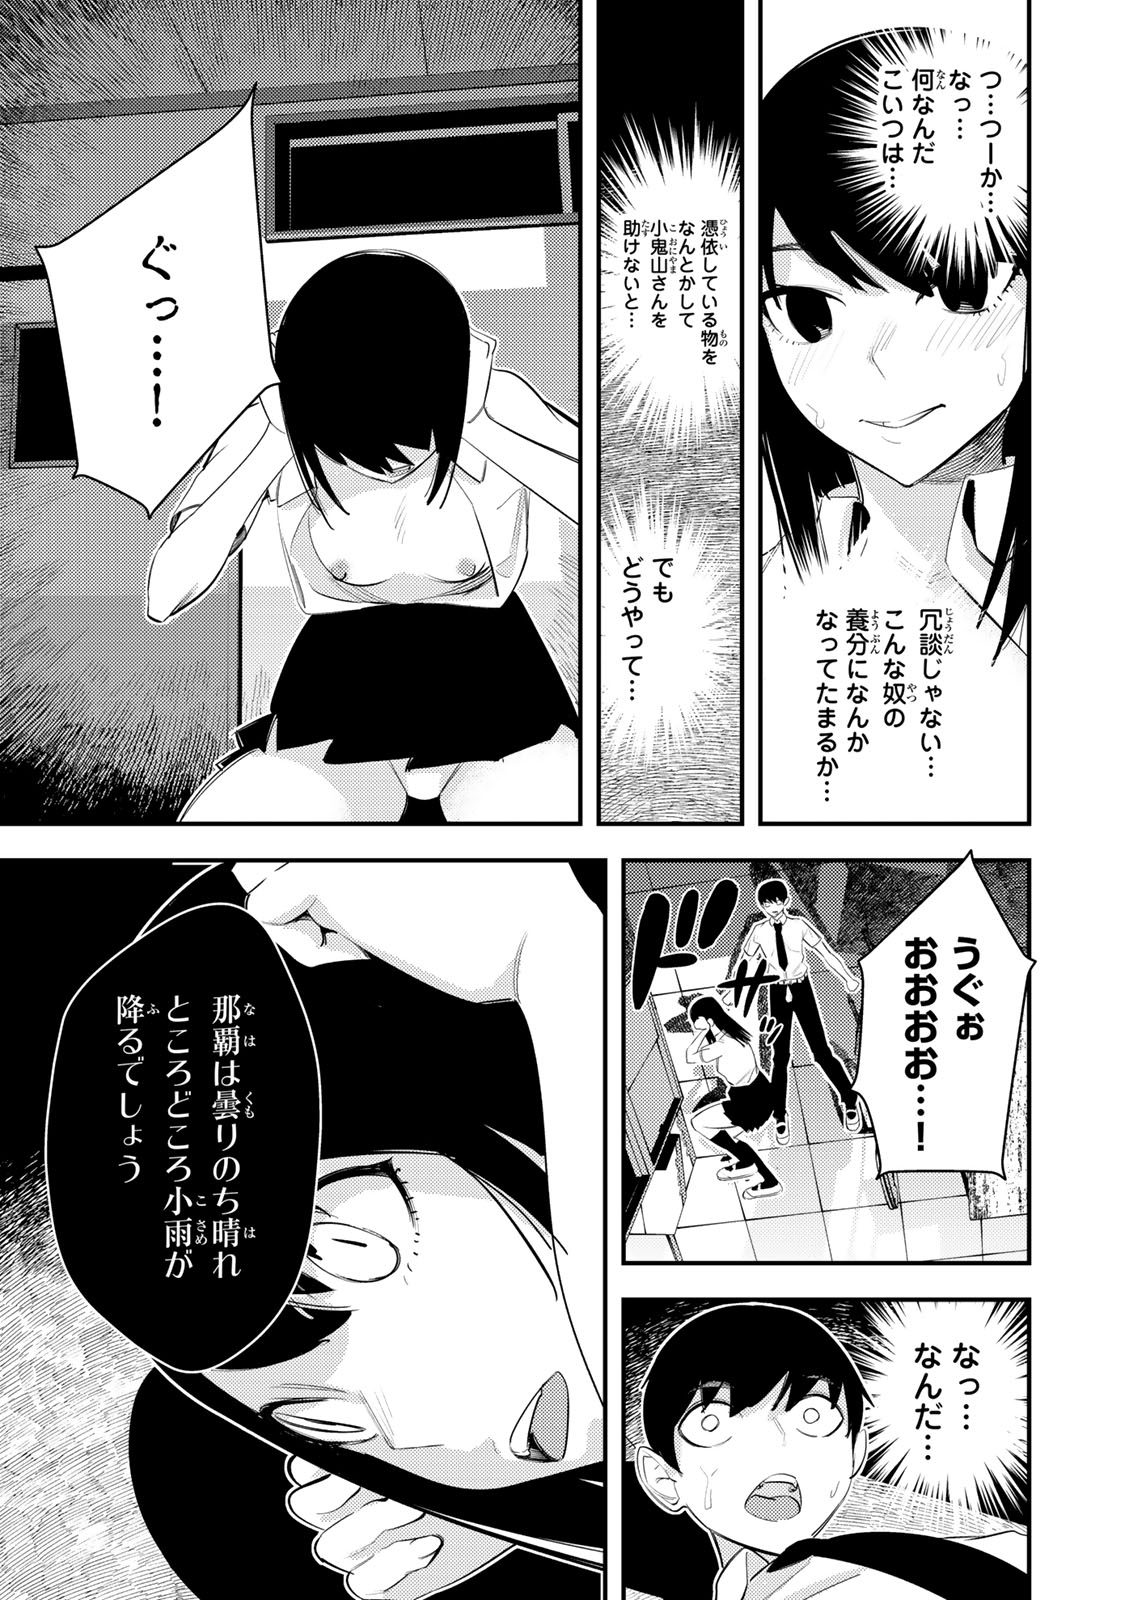 Seima Toubatsu Deneidan - Chapter 1 - Page 22